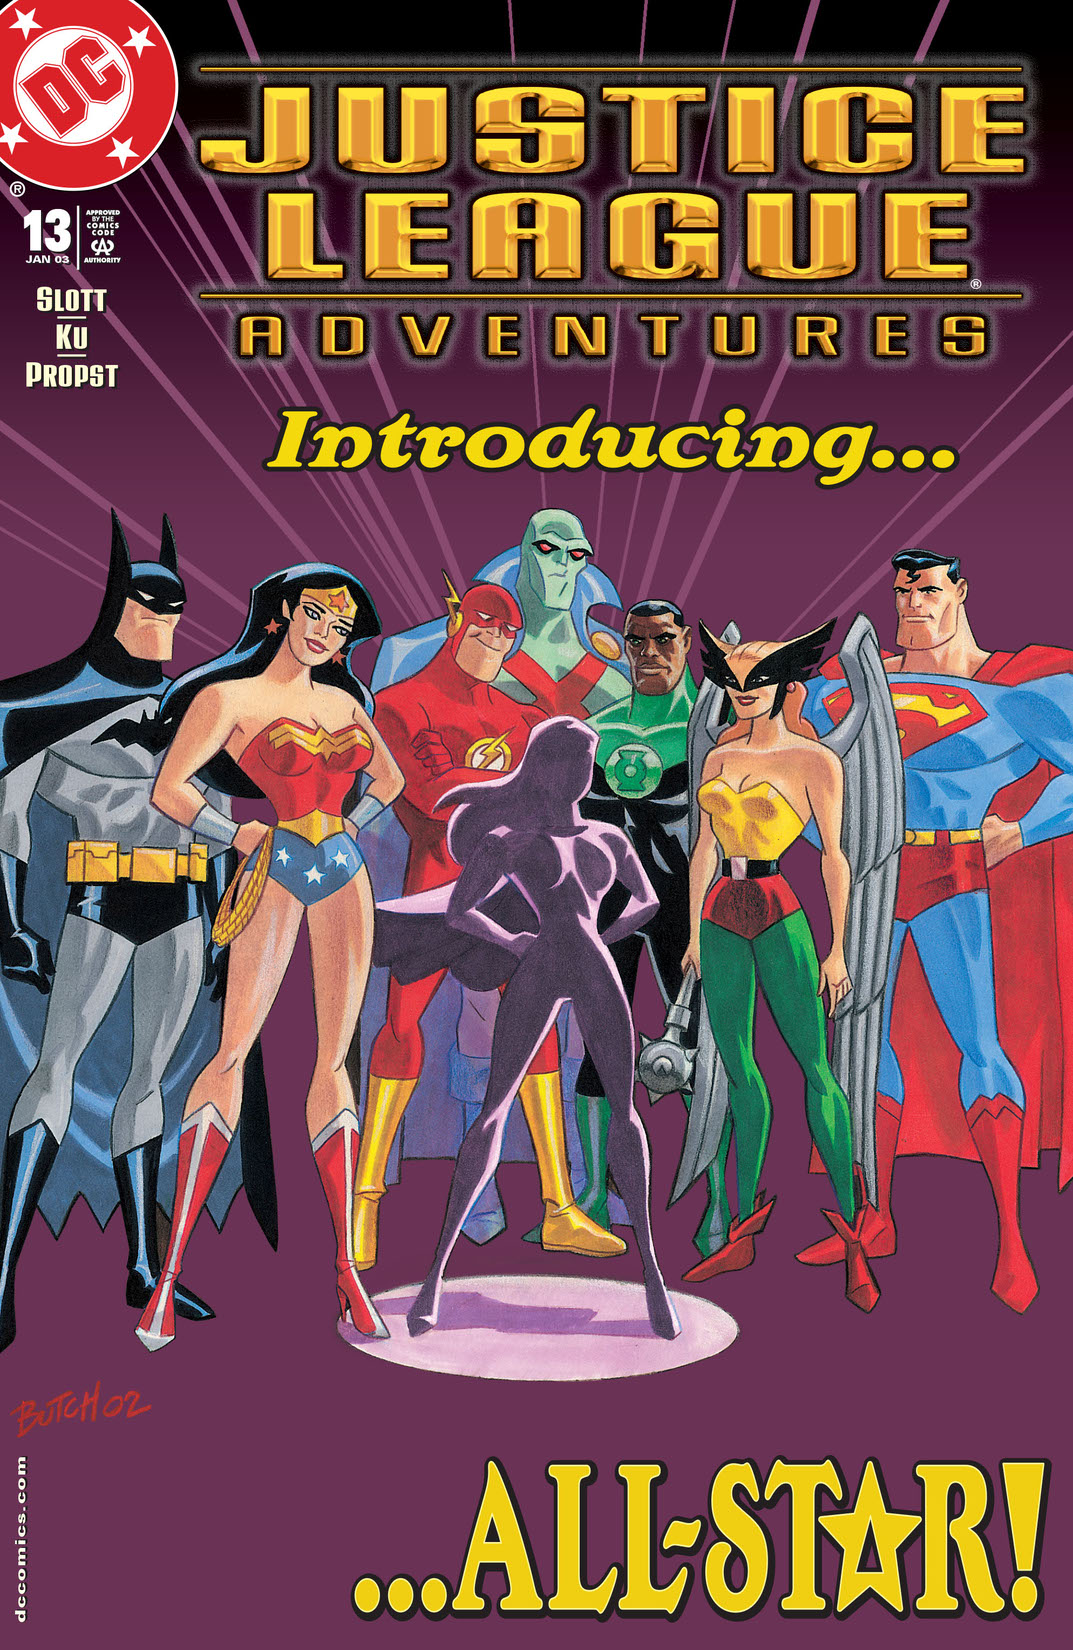 Justice League Adventures #13 preview images